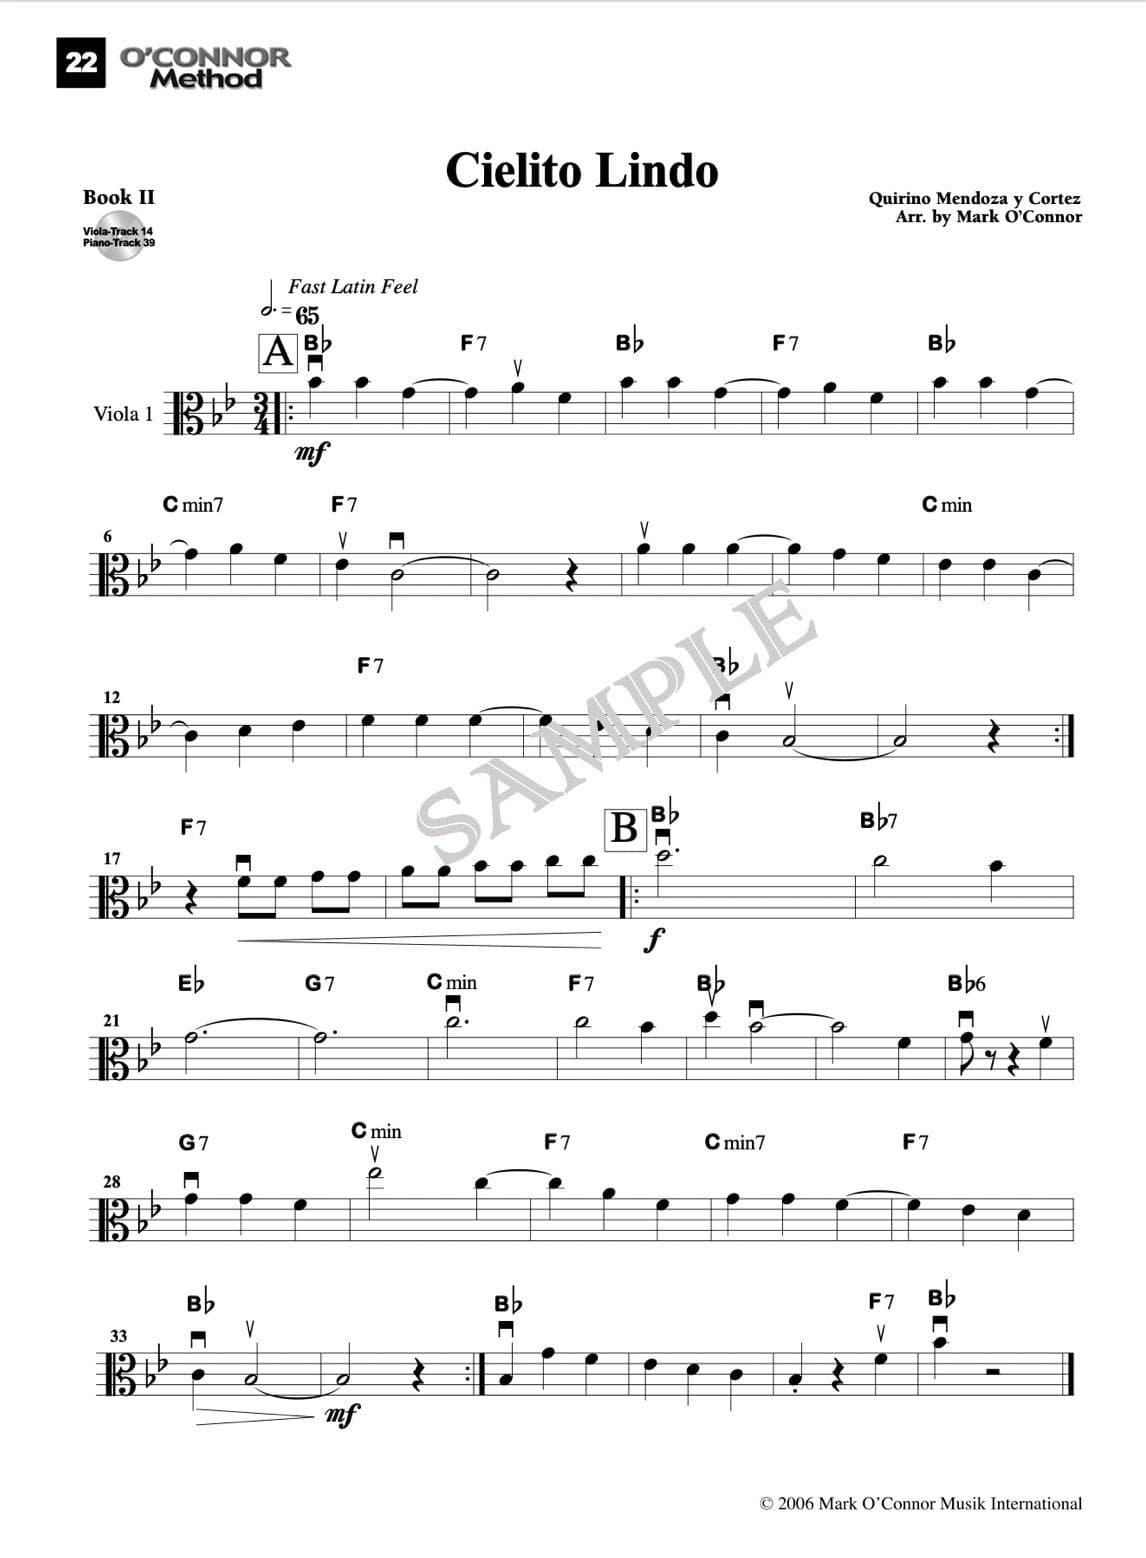 O'Connor Viola Method Book II - Digital Download